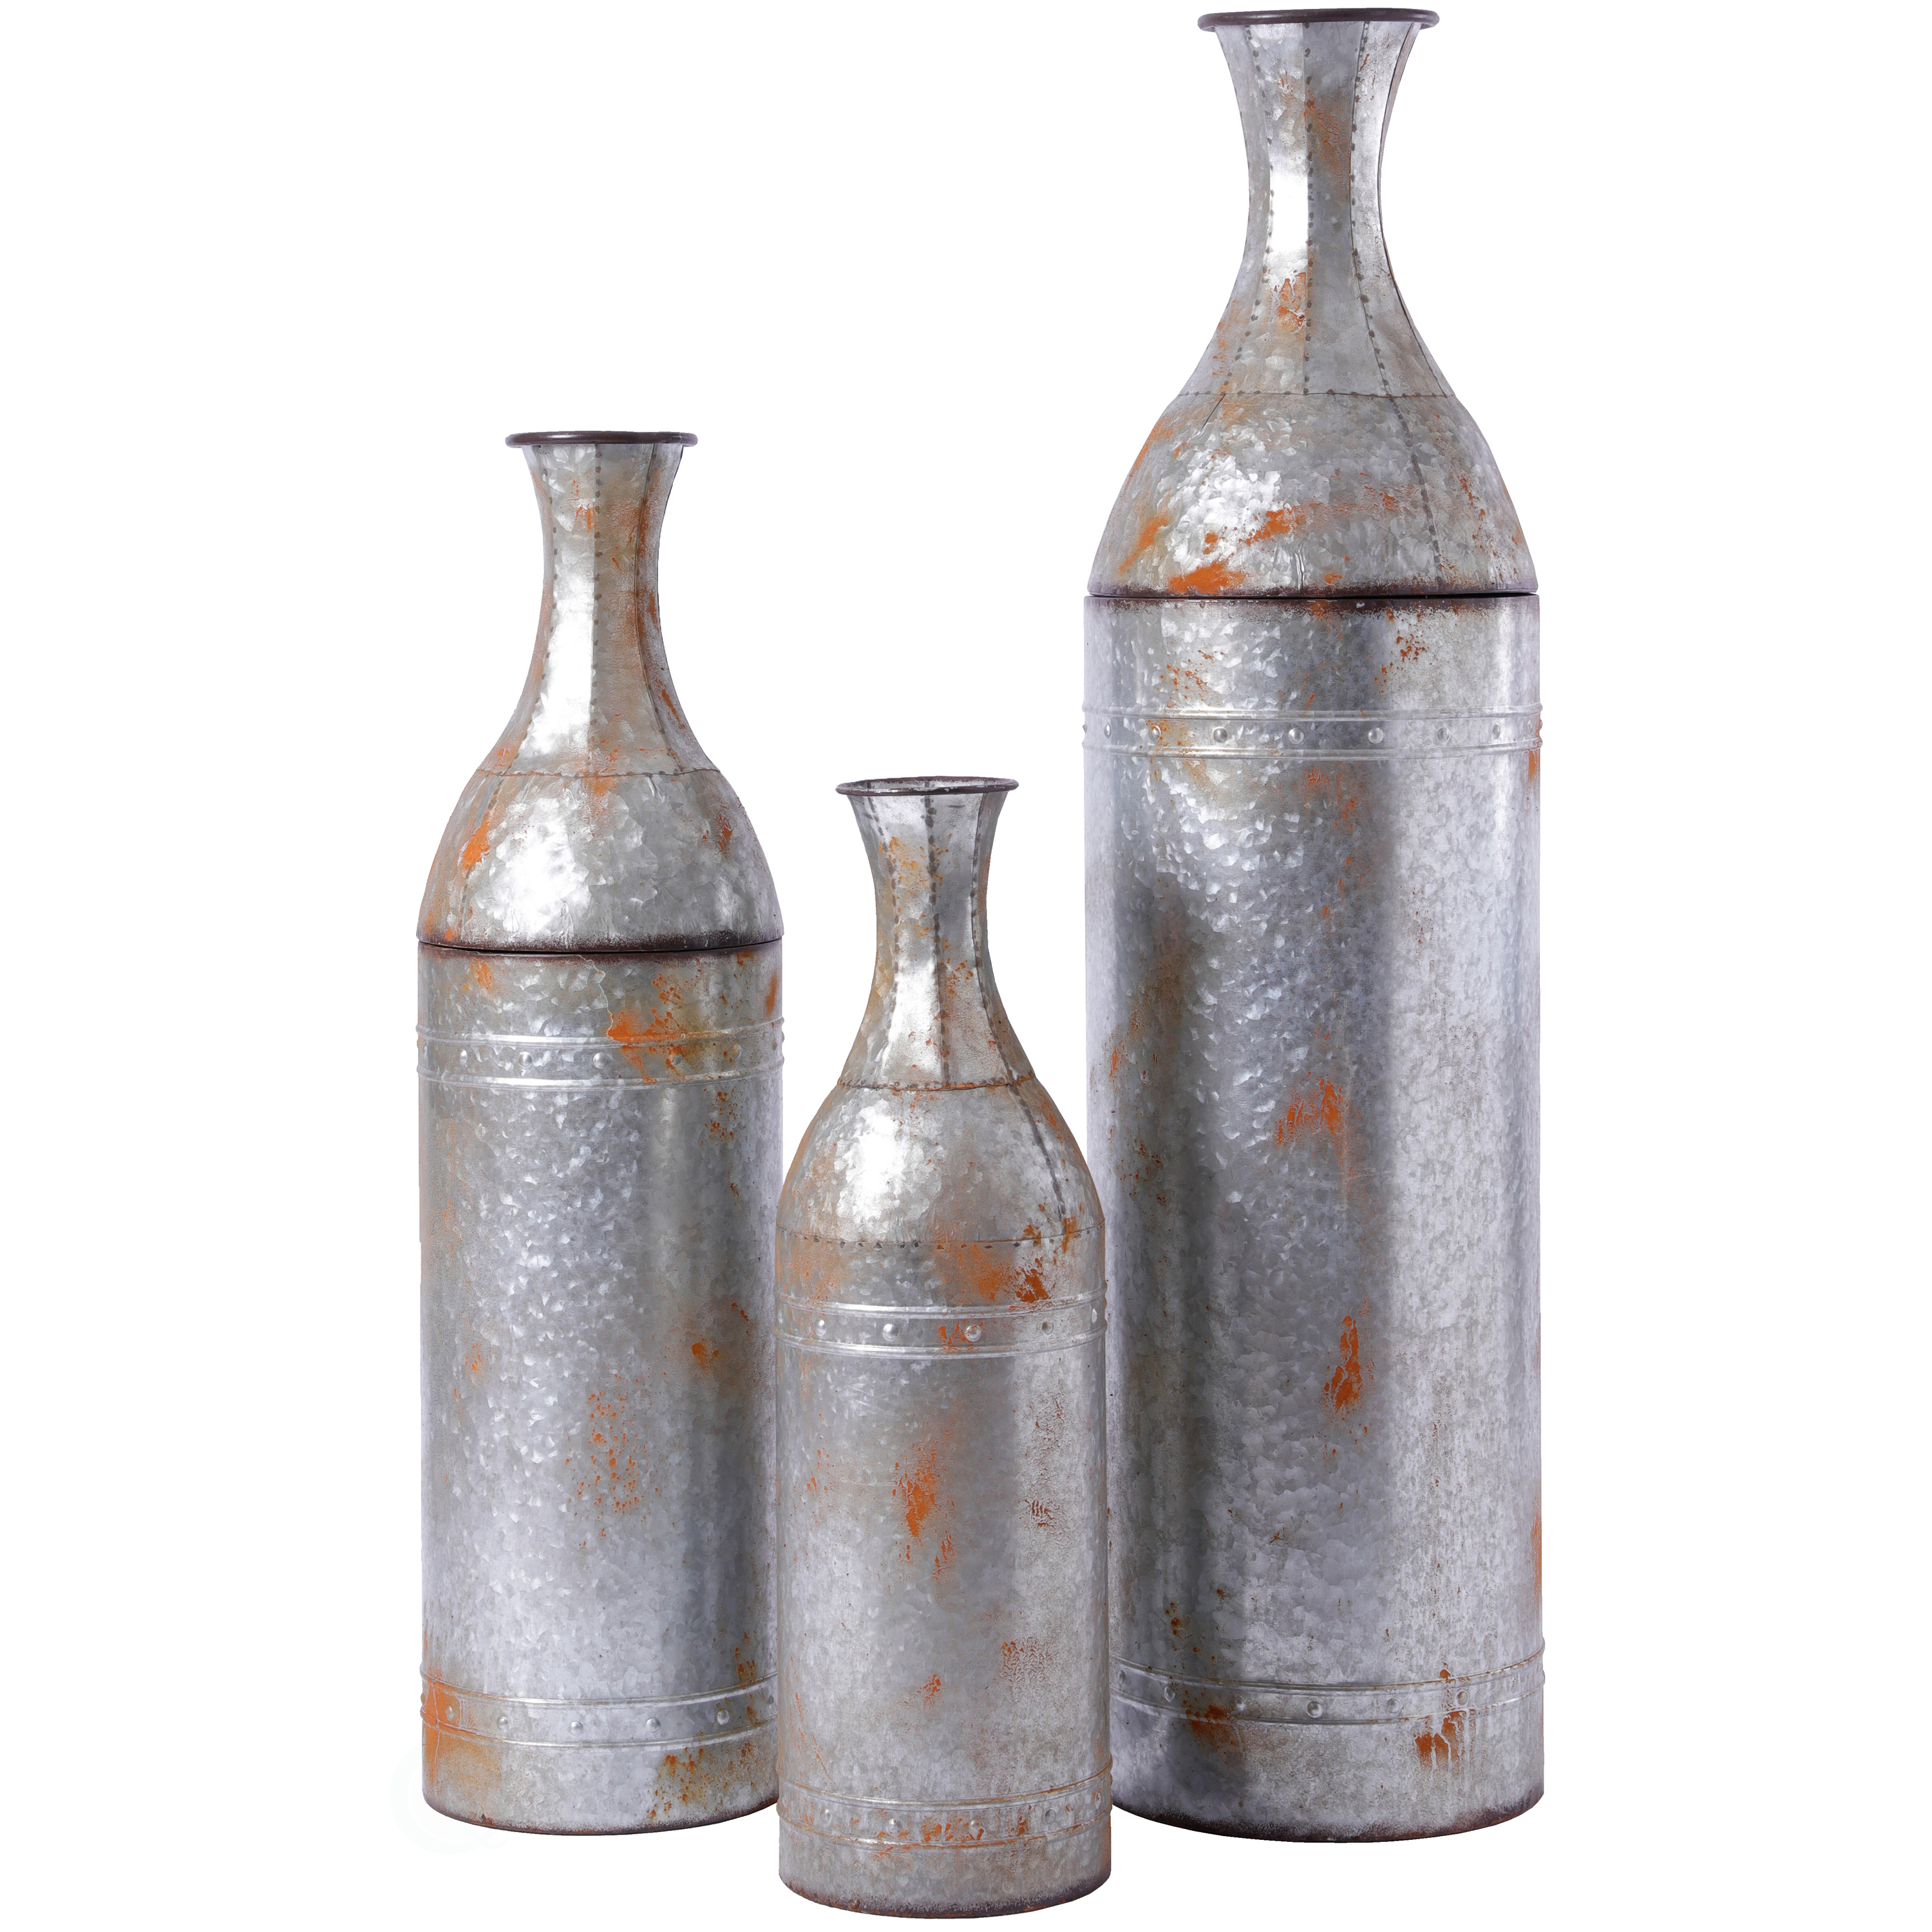 Rustic Farmhouse Style Galvanized Metal Floor Vase Decoration - Set Of 3